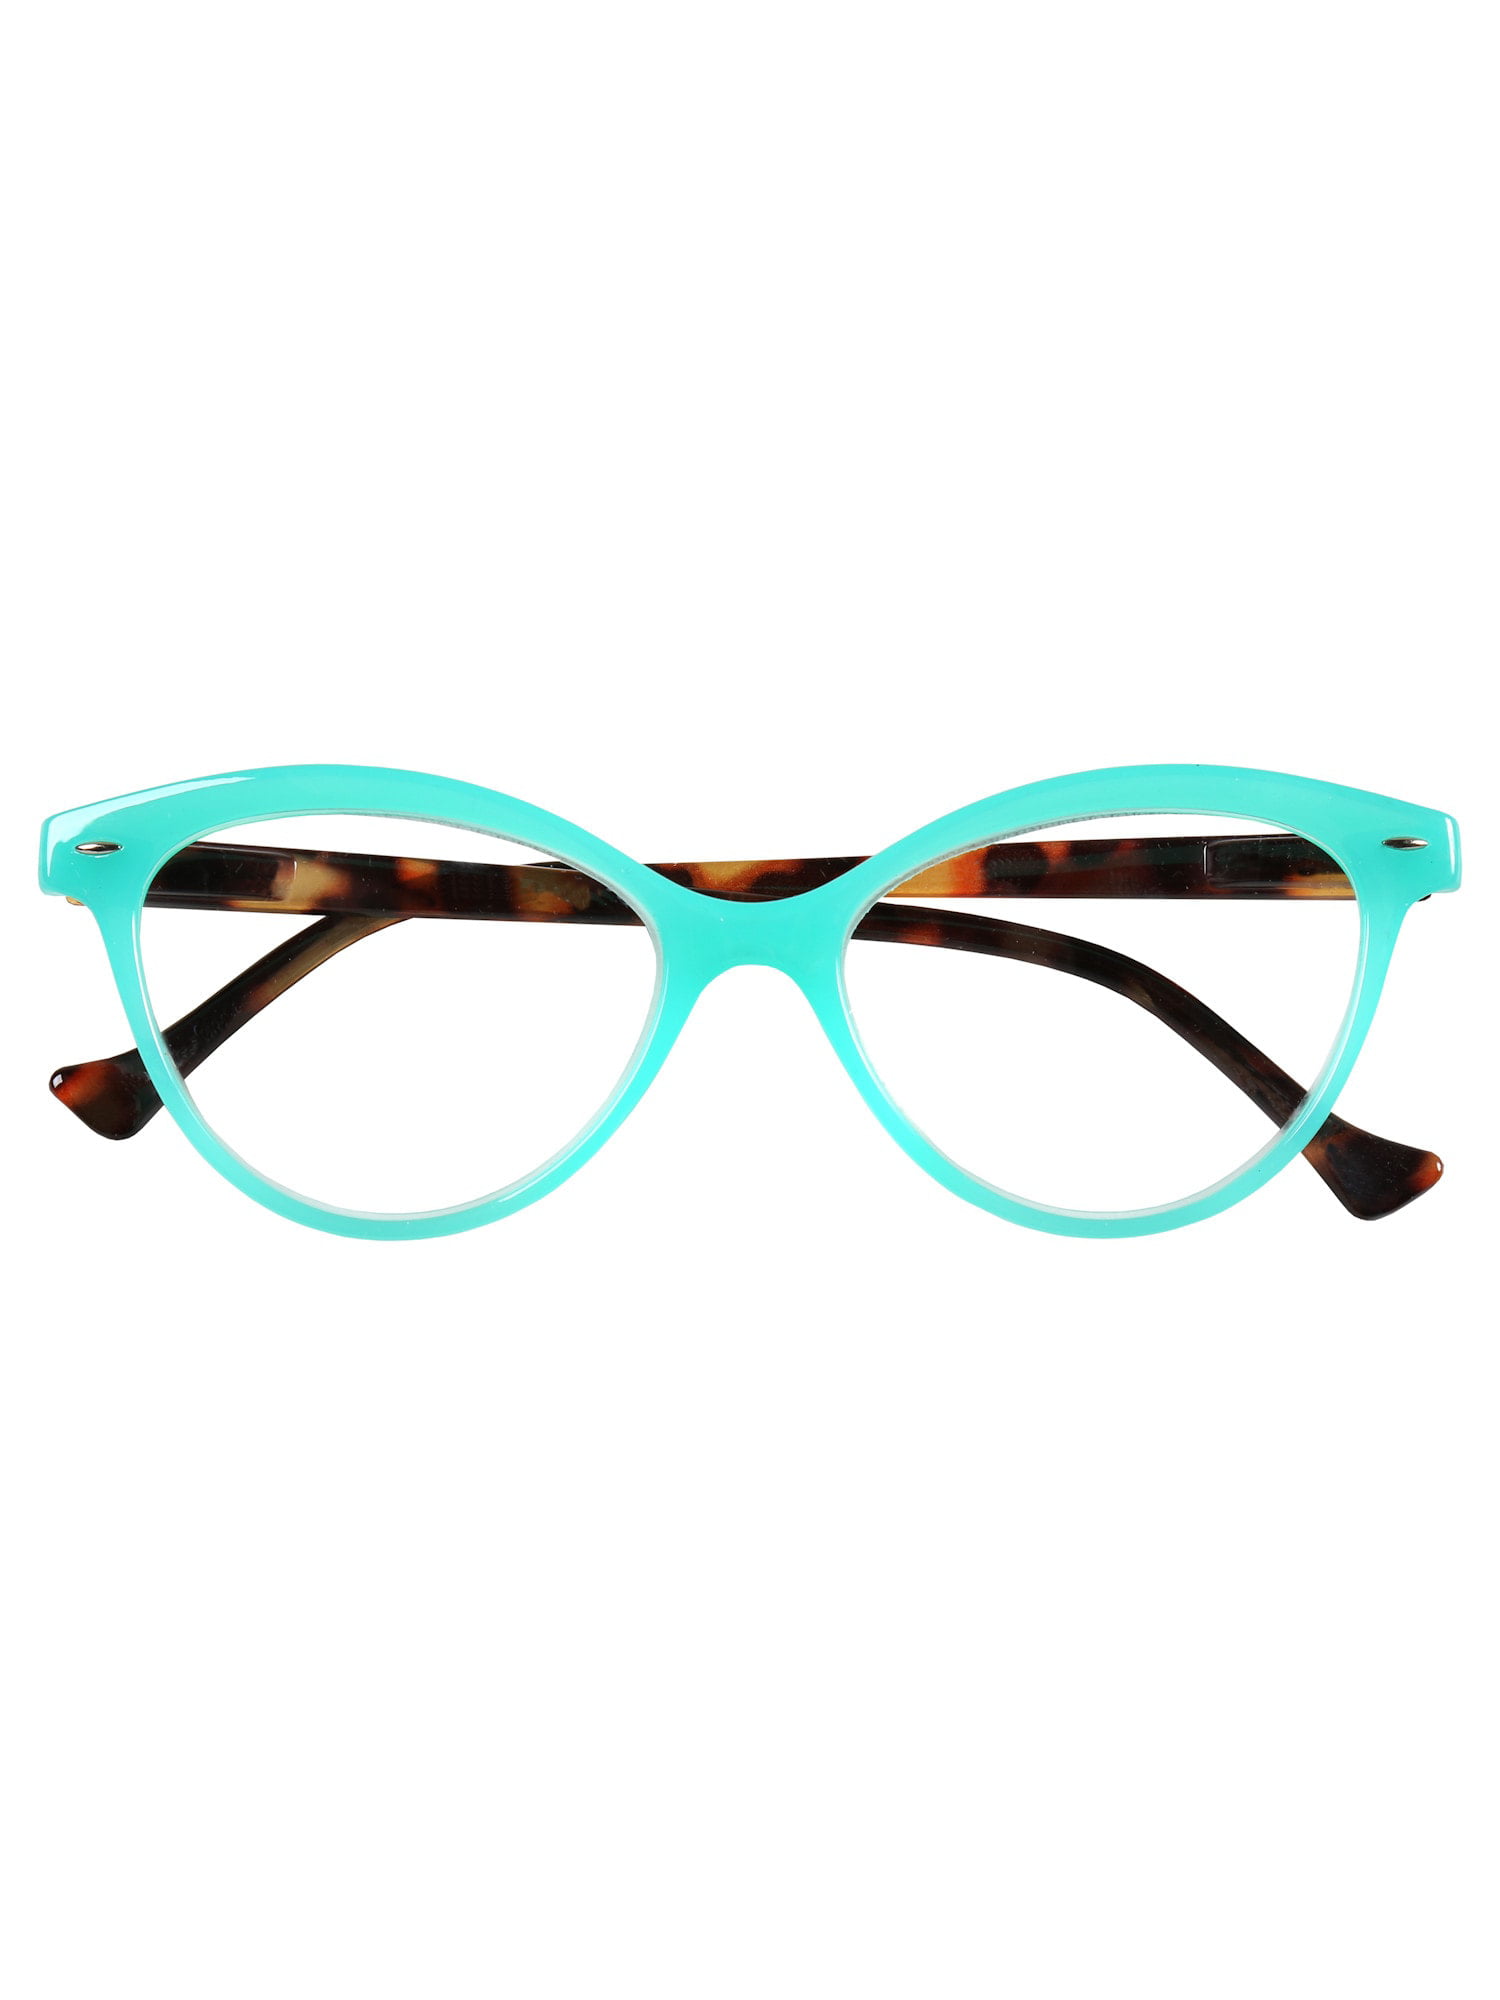 Cougar Sunglasses Women's Cat Eye Fashion Readers - Aqua ...